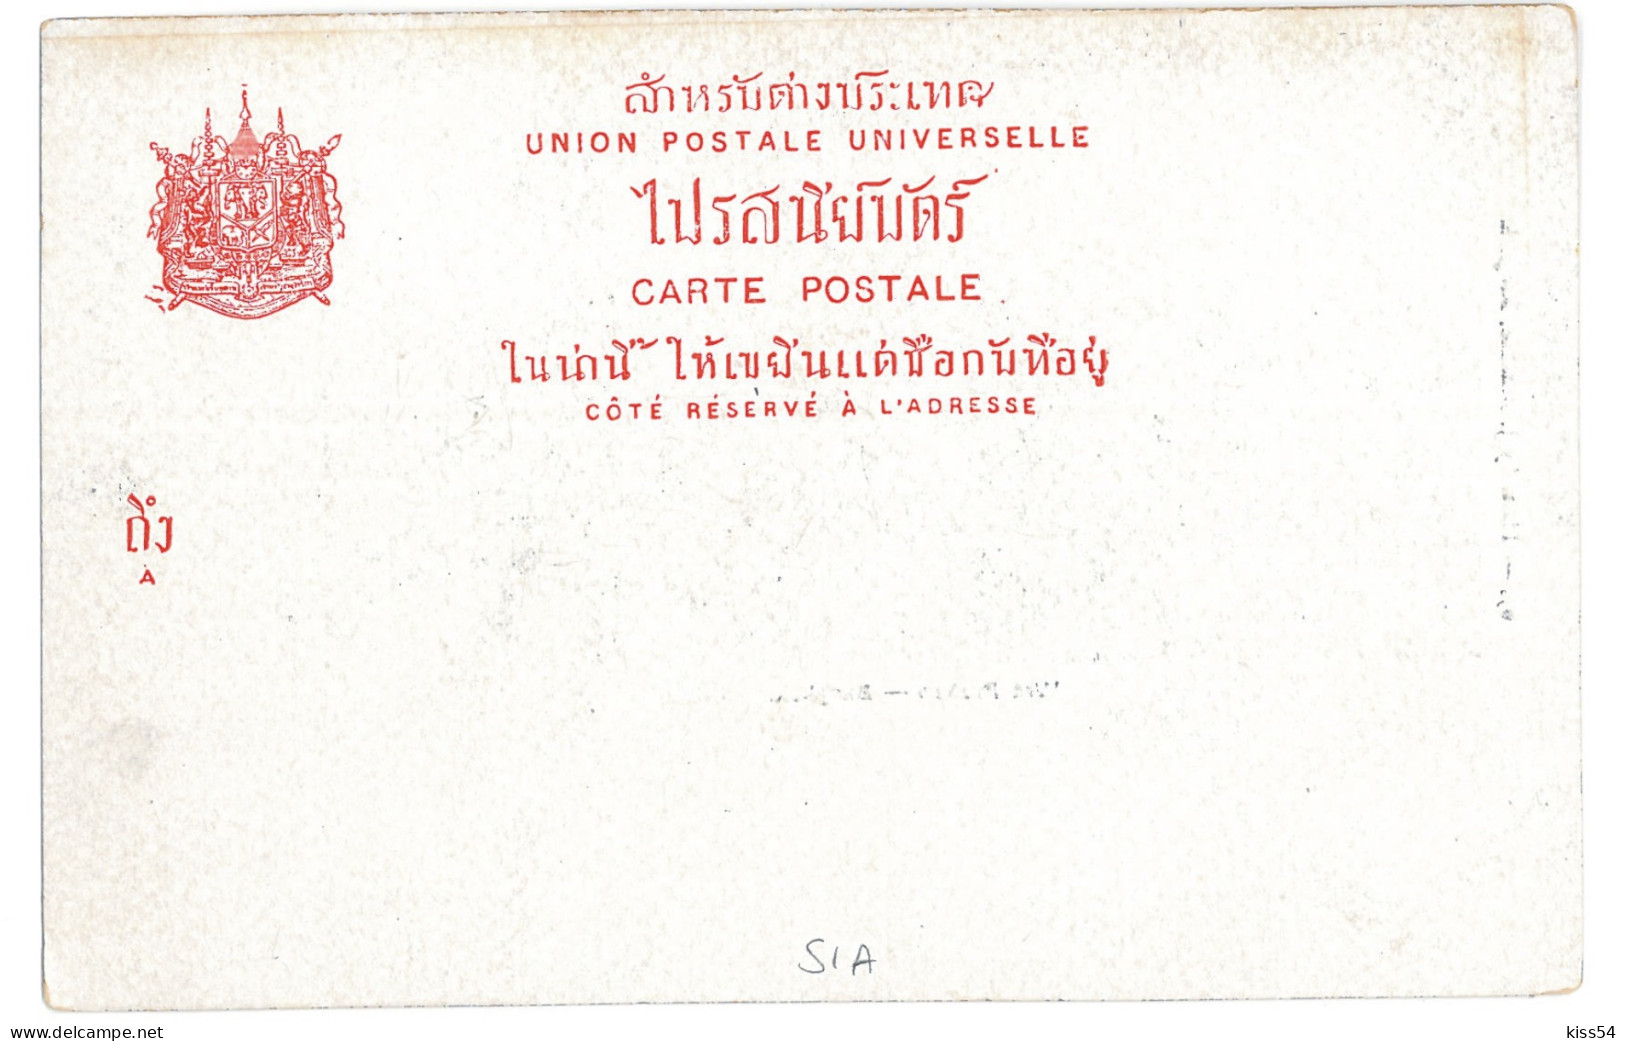 TH 60 - 11927 BANGKOK, Thailand, Litho - Old Postcard - Unused - Thaïland